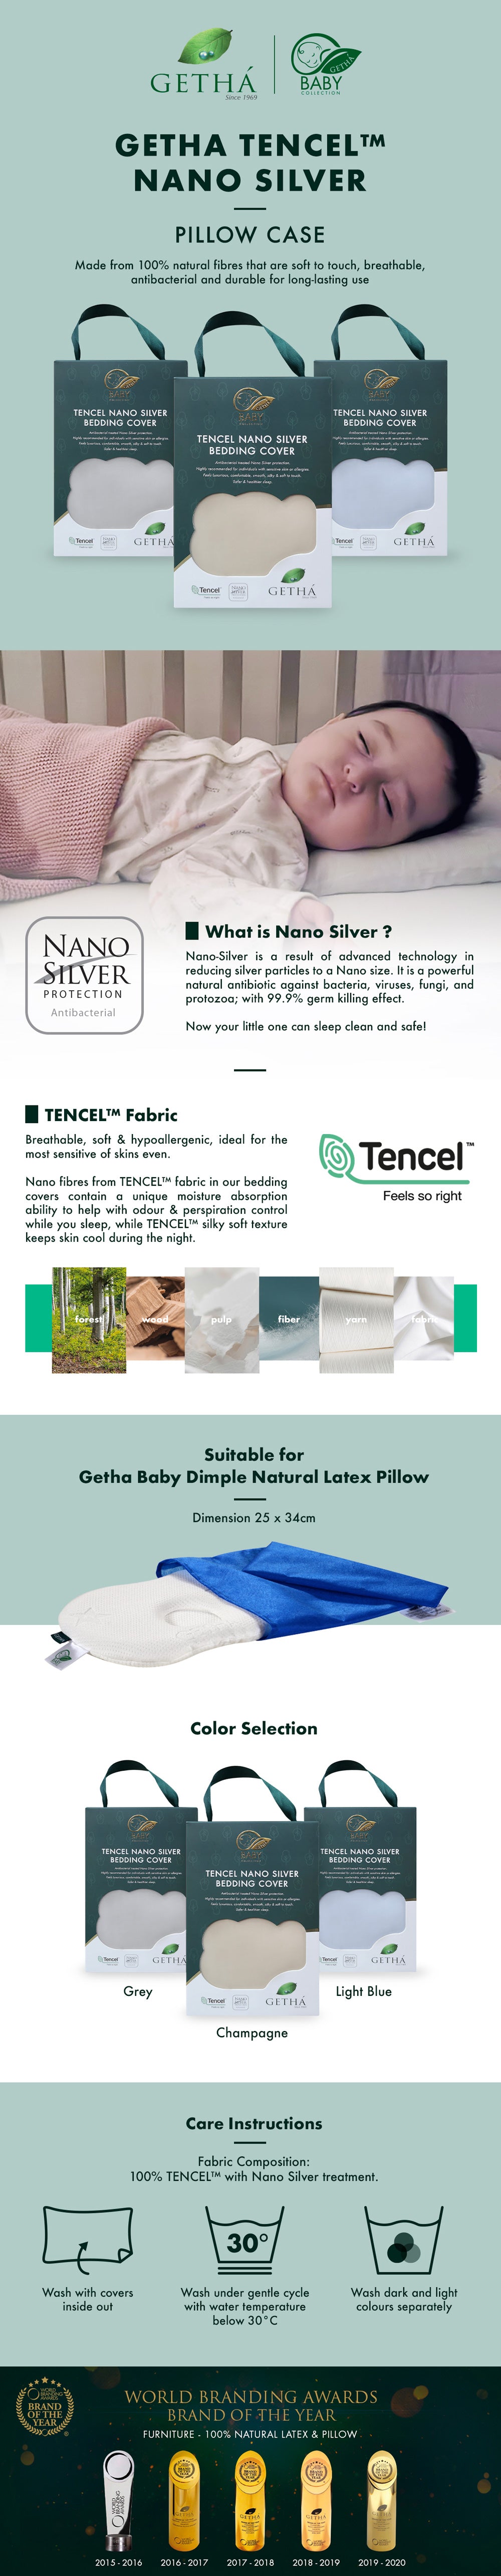 Getha Tencel Nano Silver Pillow Case – Baby Dimple Latex Pillow